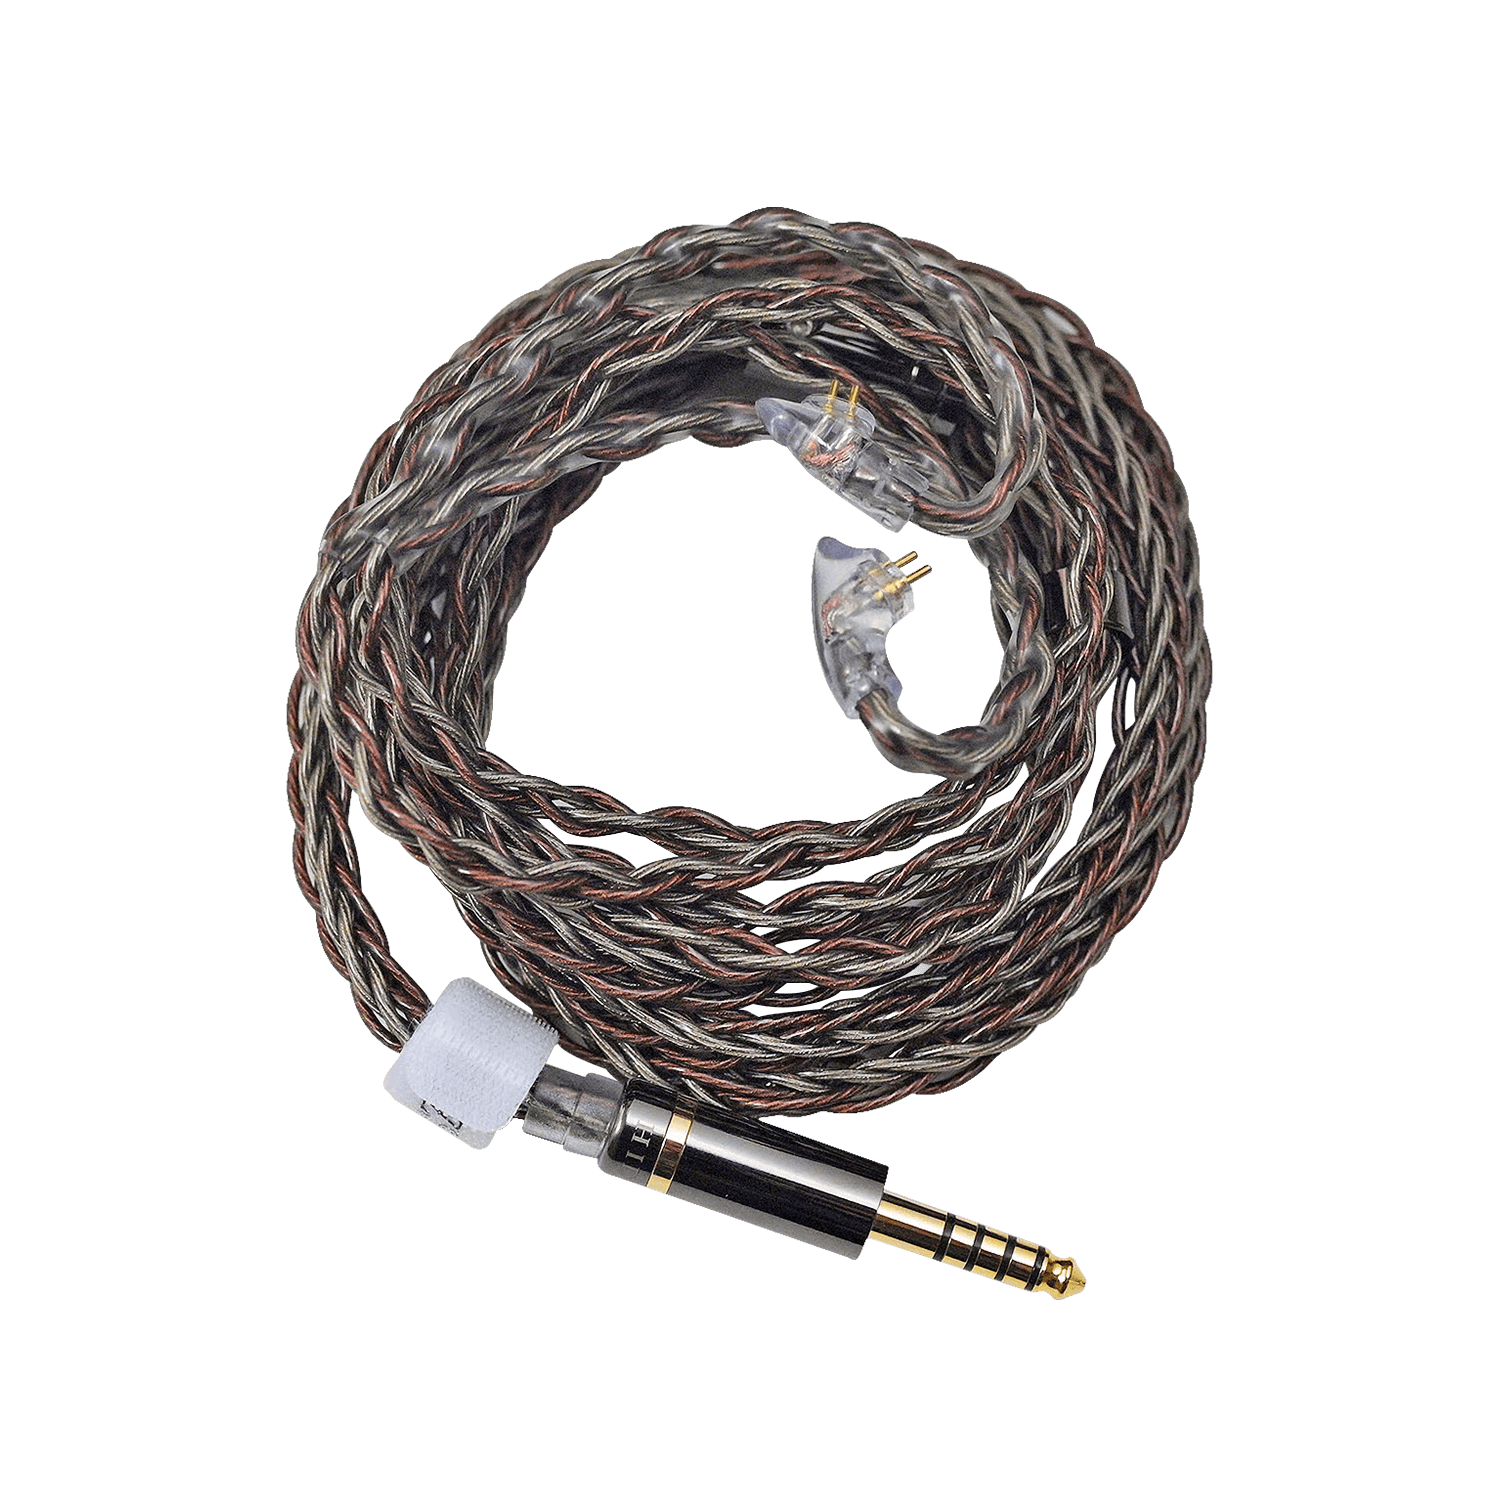 Hidizs MS5-4.4-RC Balanced Earphone Upgrade Cable